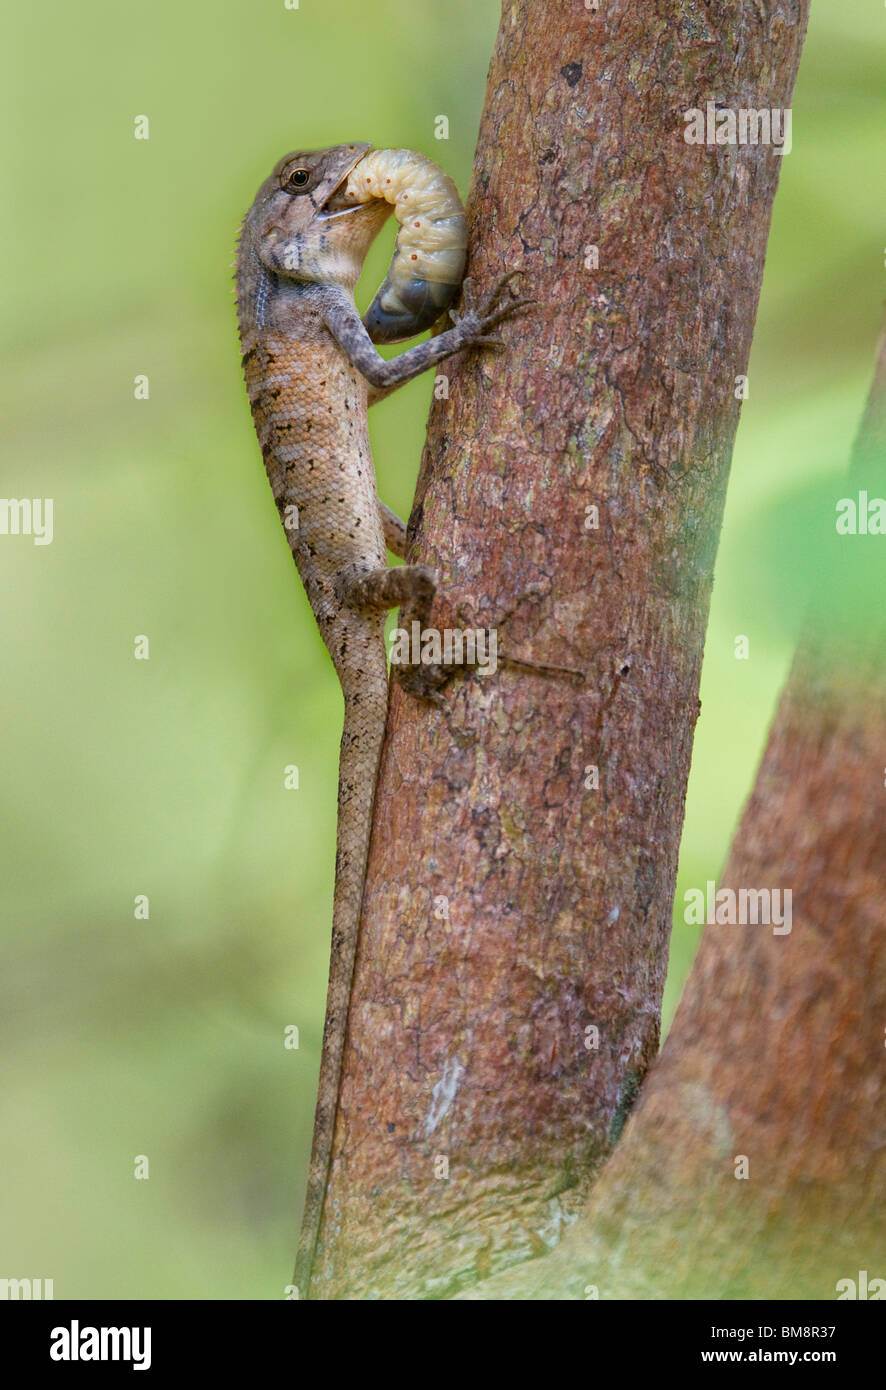 Lézard Calotes versicolor (jardin) qui se nourrissent de larves d'insectes, de gros Ko Ra, le sud de la Thaïlande. Banque D'Images